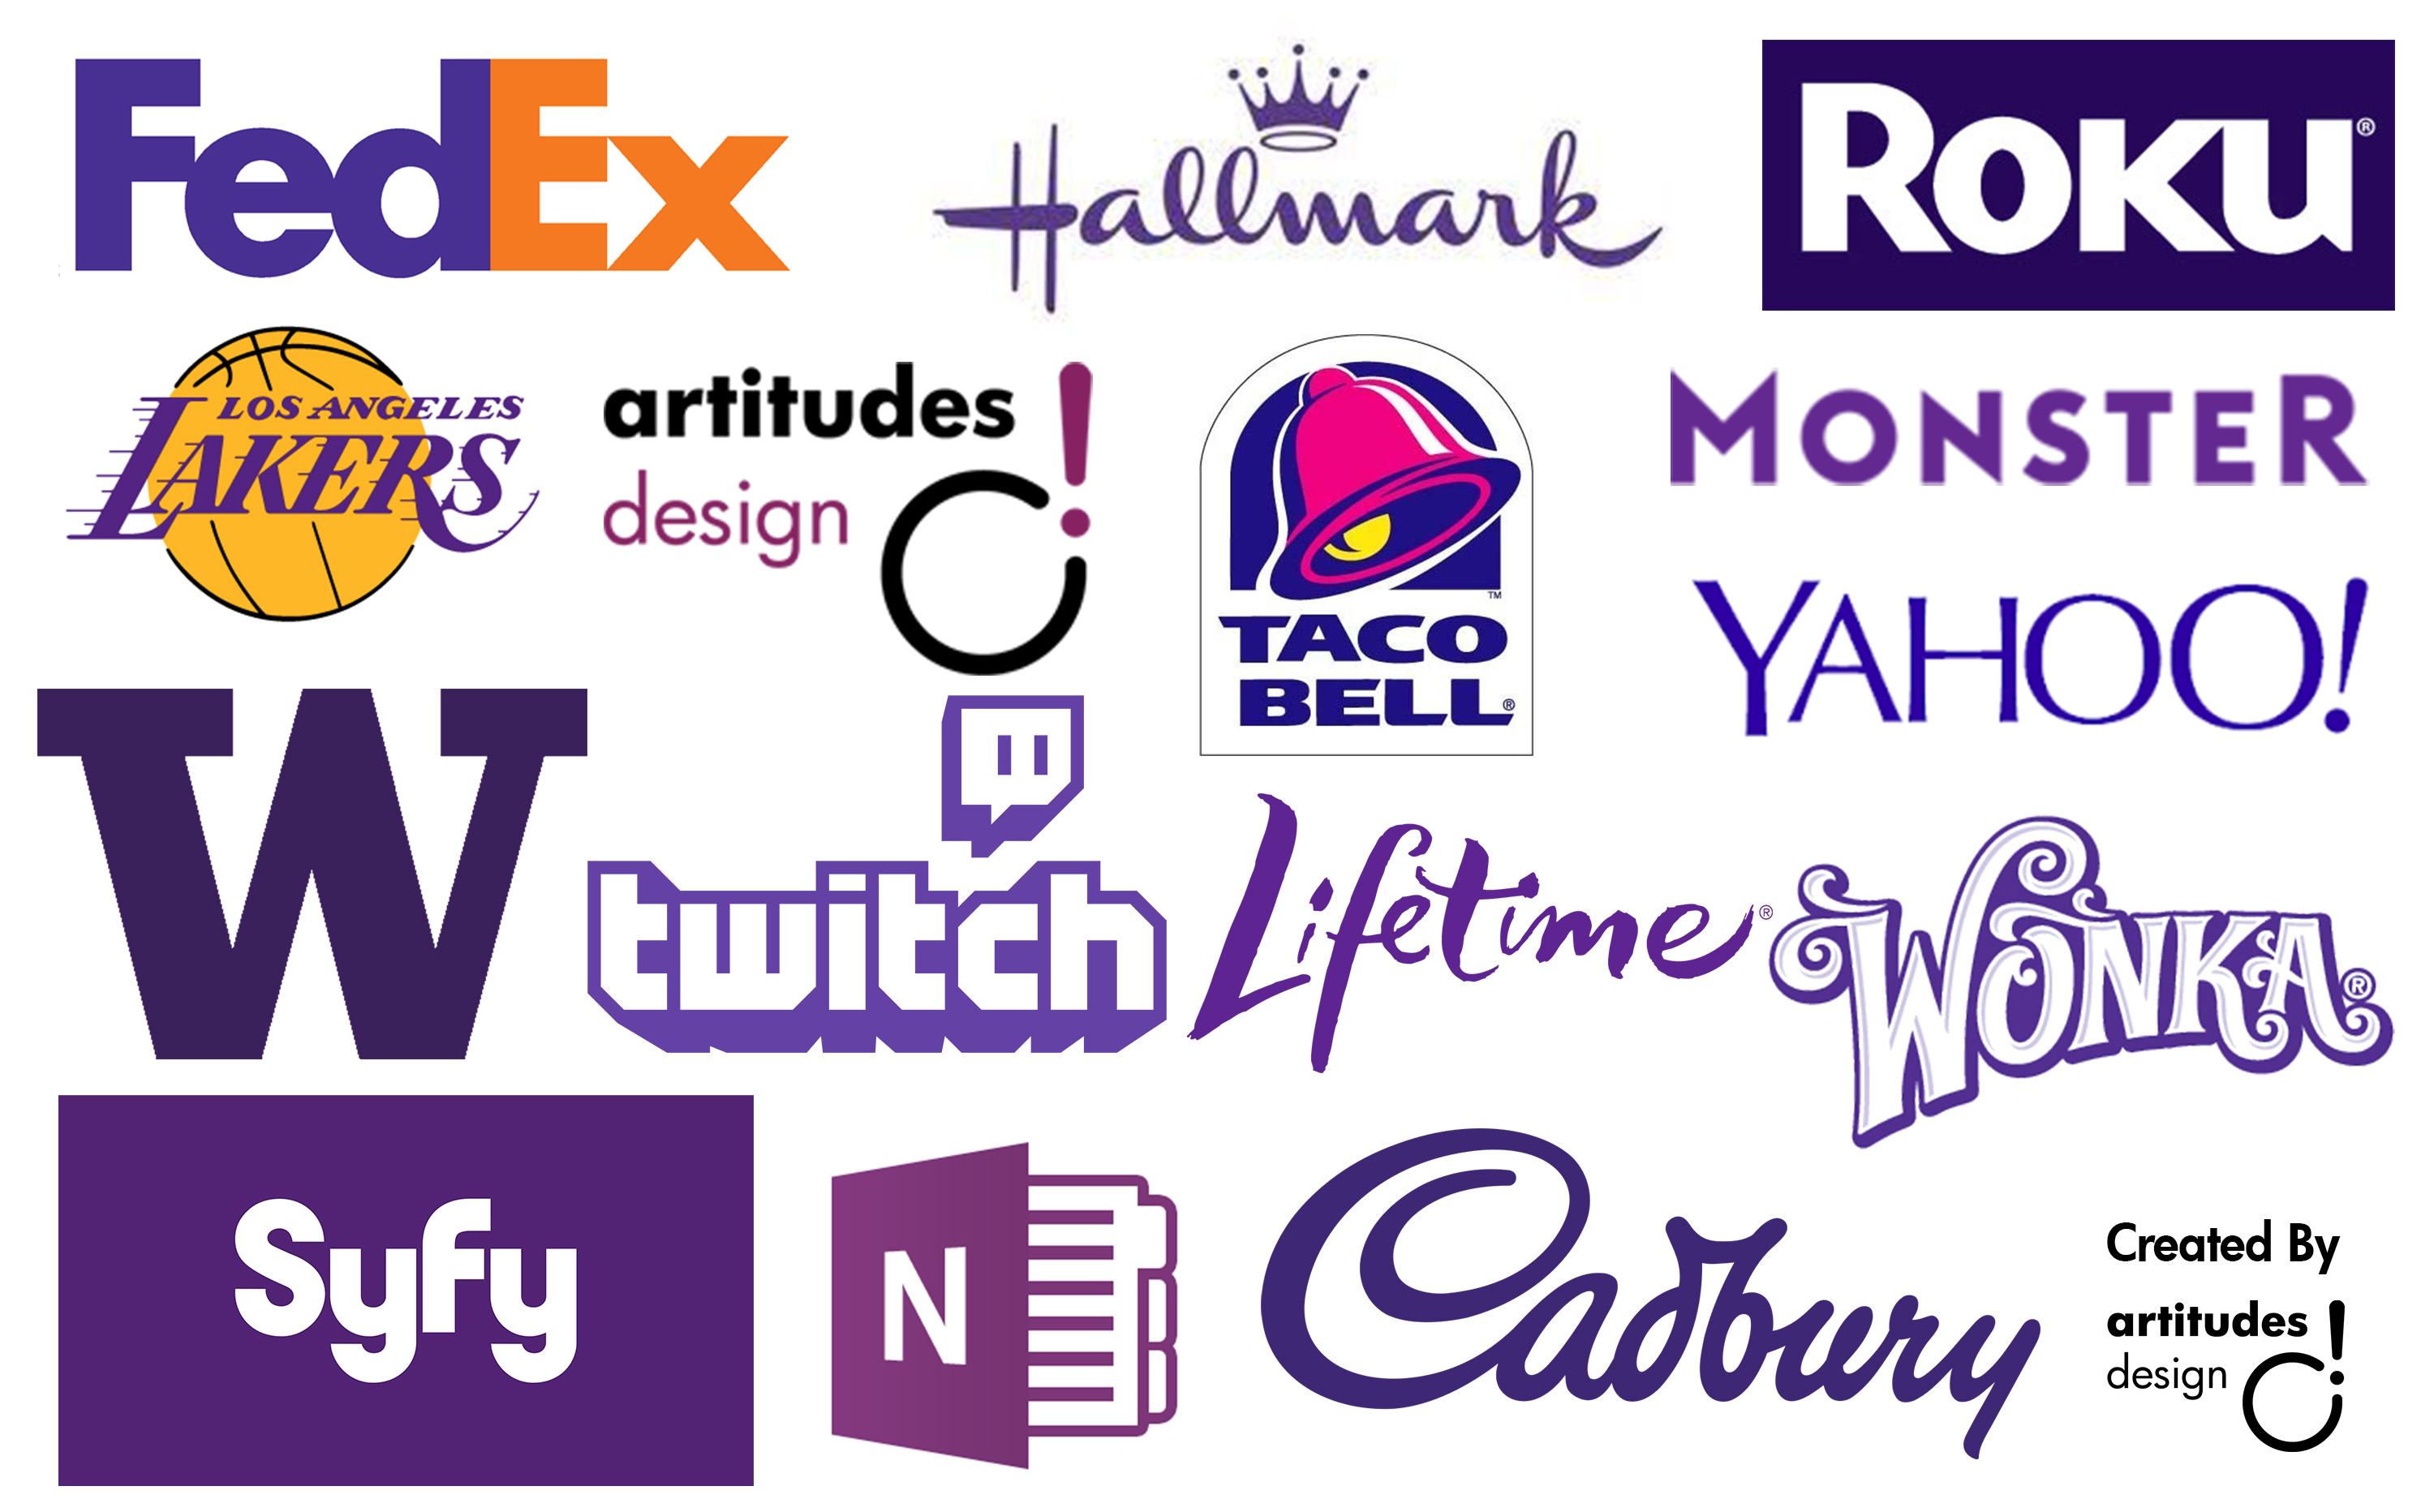 purple brands of mattresses